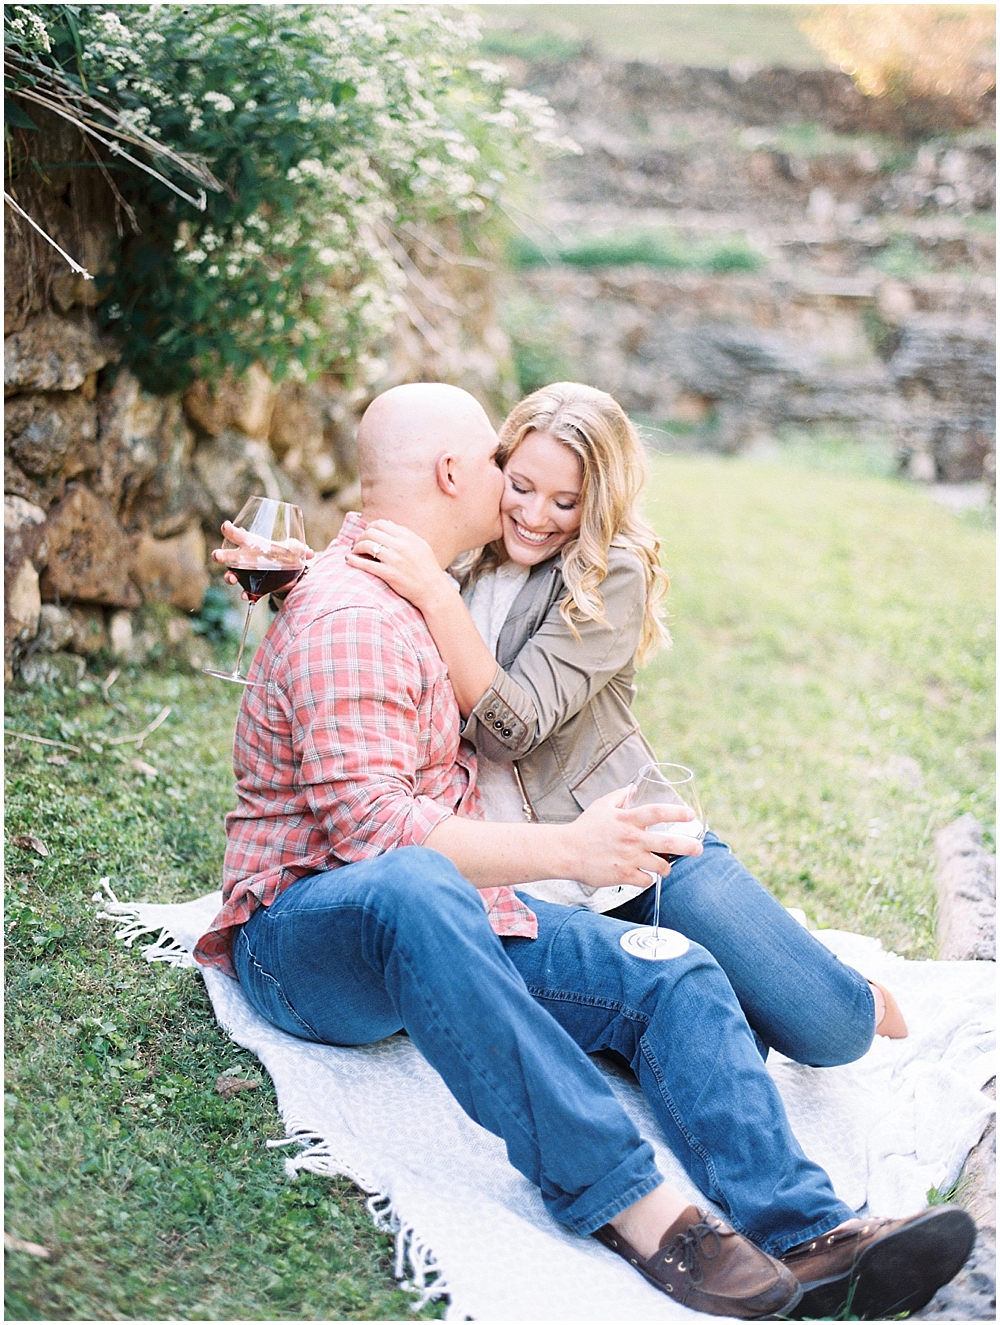 Romantic engagement photos in a rock garden